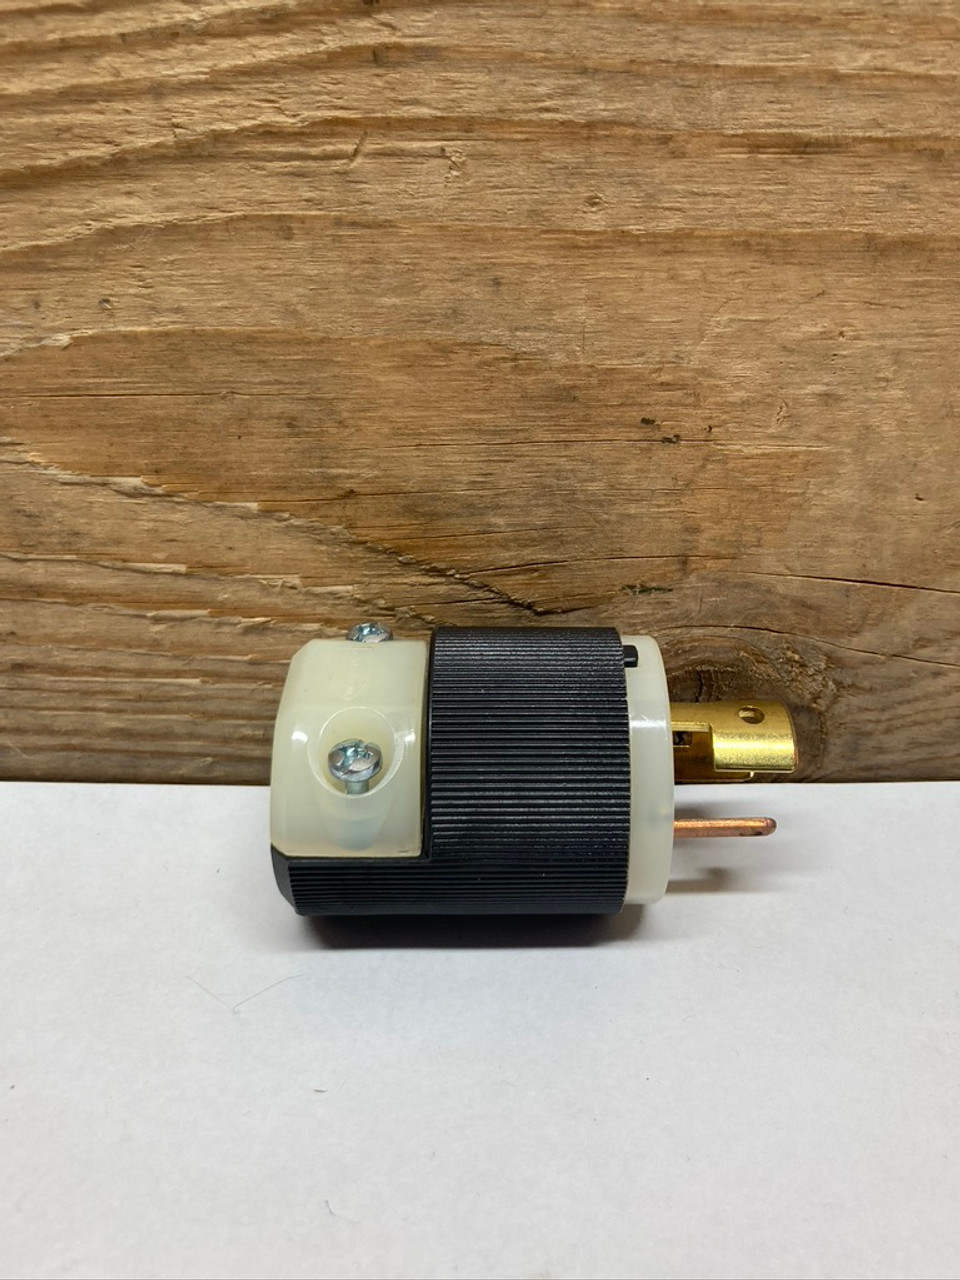 Twist Lock Male Plug HBL7567C Hubbell 10A 250V/15A 125V